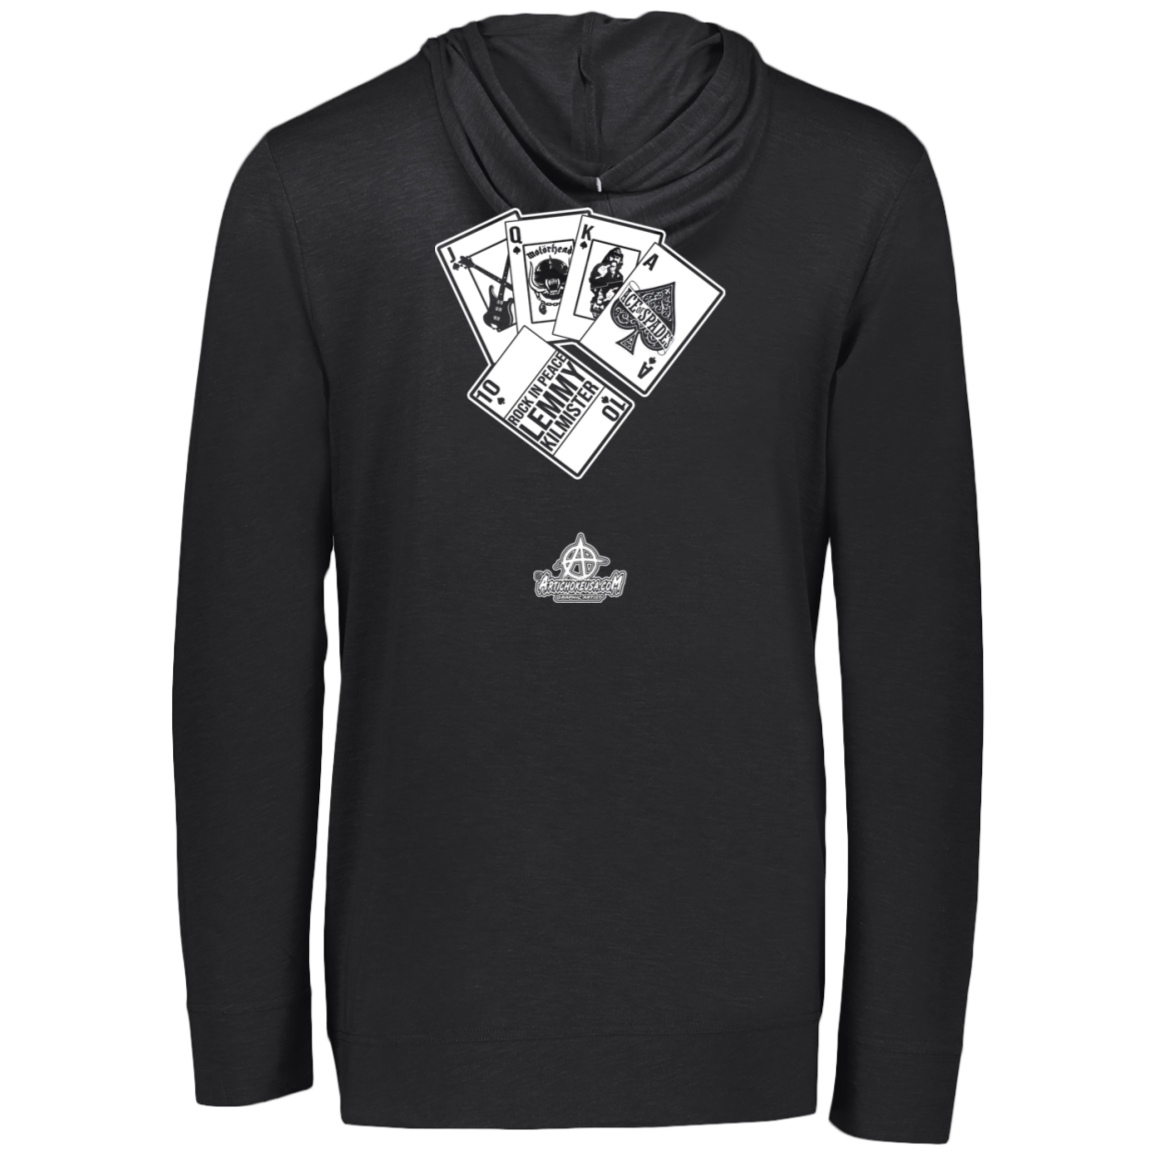 ArtichokeUSA Custom Design. Lemmy Kilmister "Ace of Spades" Tribute Fan Art Version 2 of 2. Eco Triblend T-Shirt Hoodie